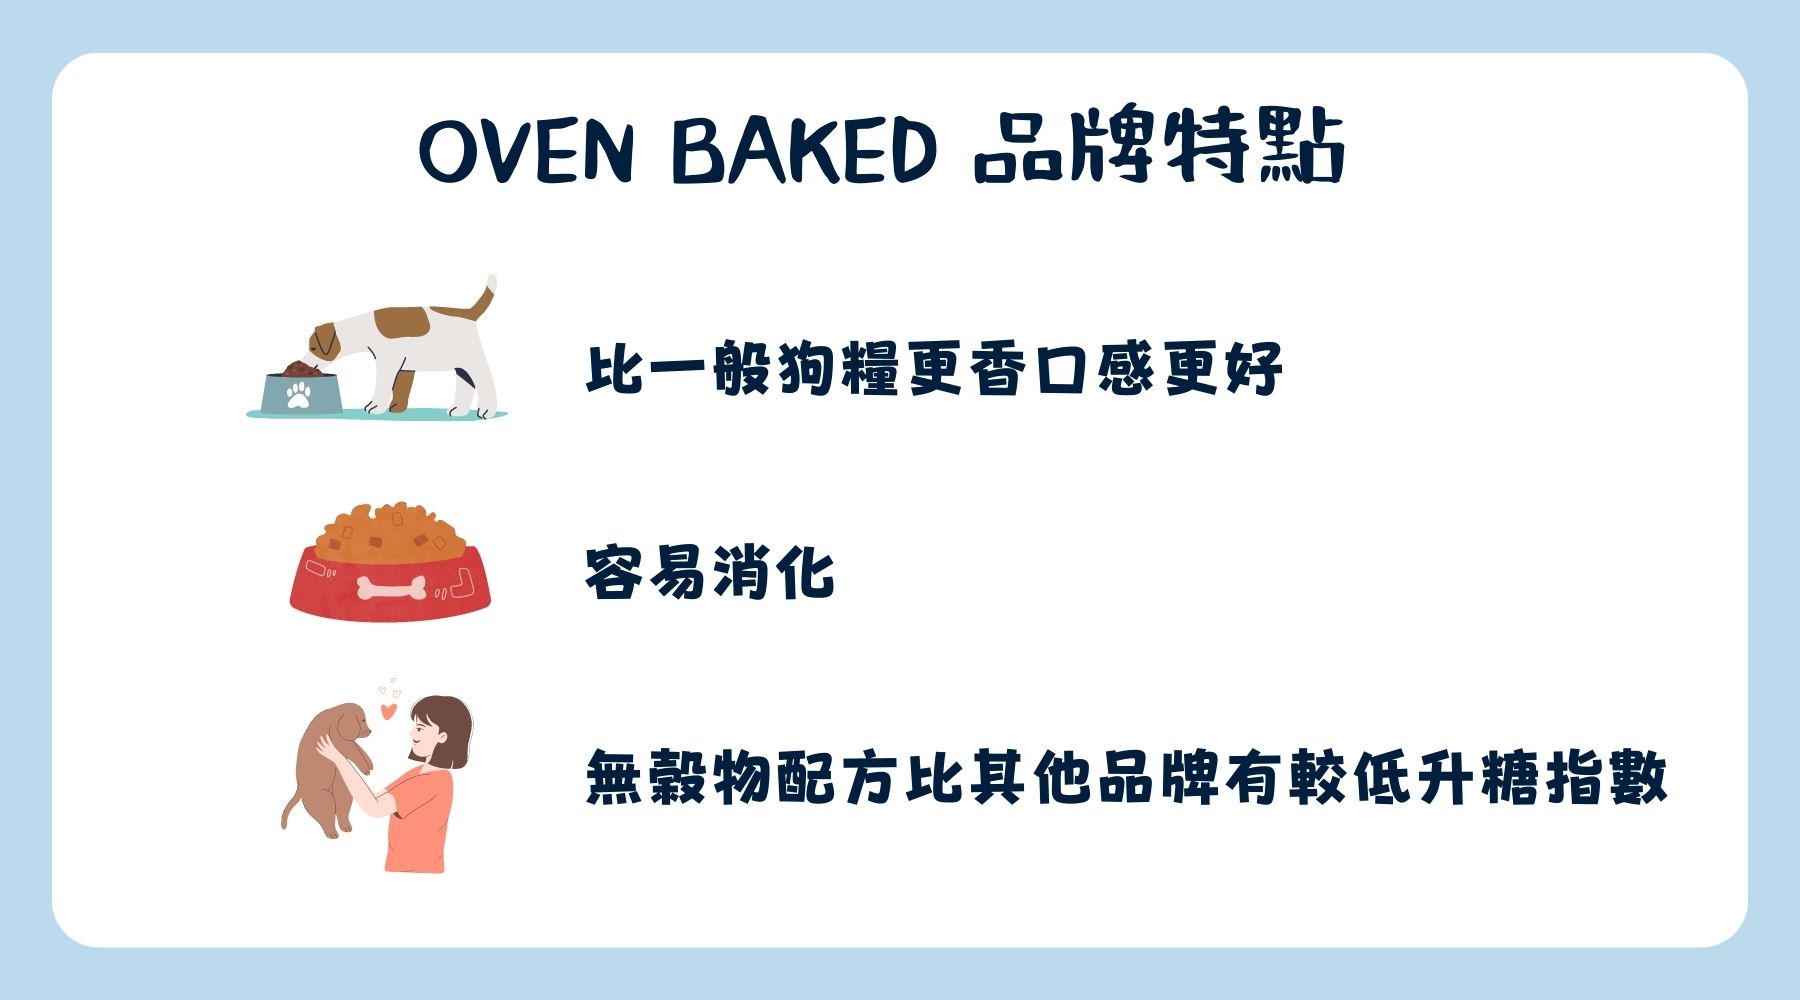 Oven Baked 品牌特點: 比一般狗糧更香口感更好,容易消化,無穀物配方比其他品牌有較低升糖指數